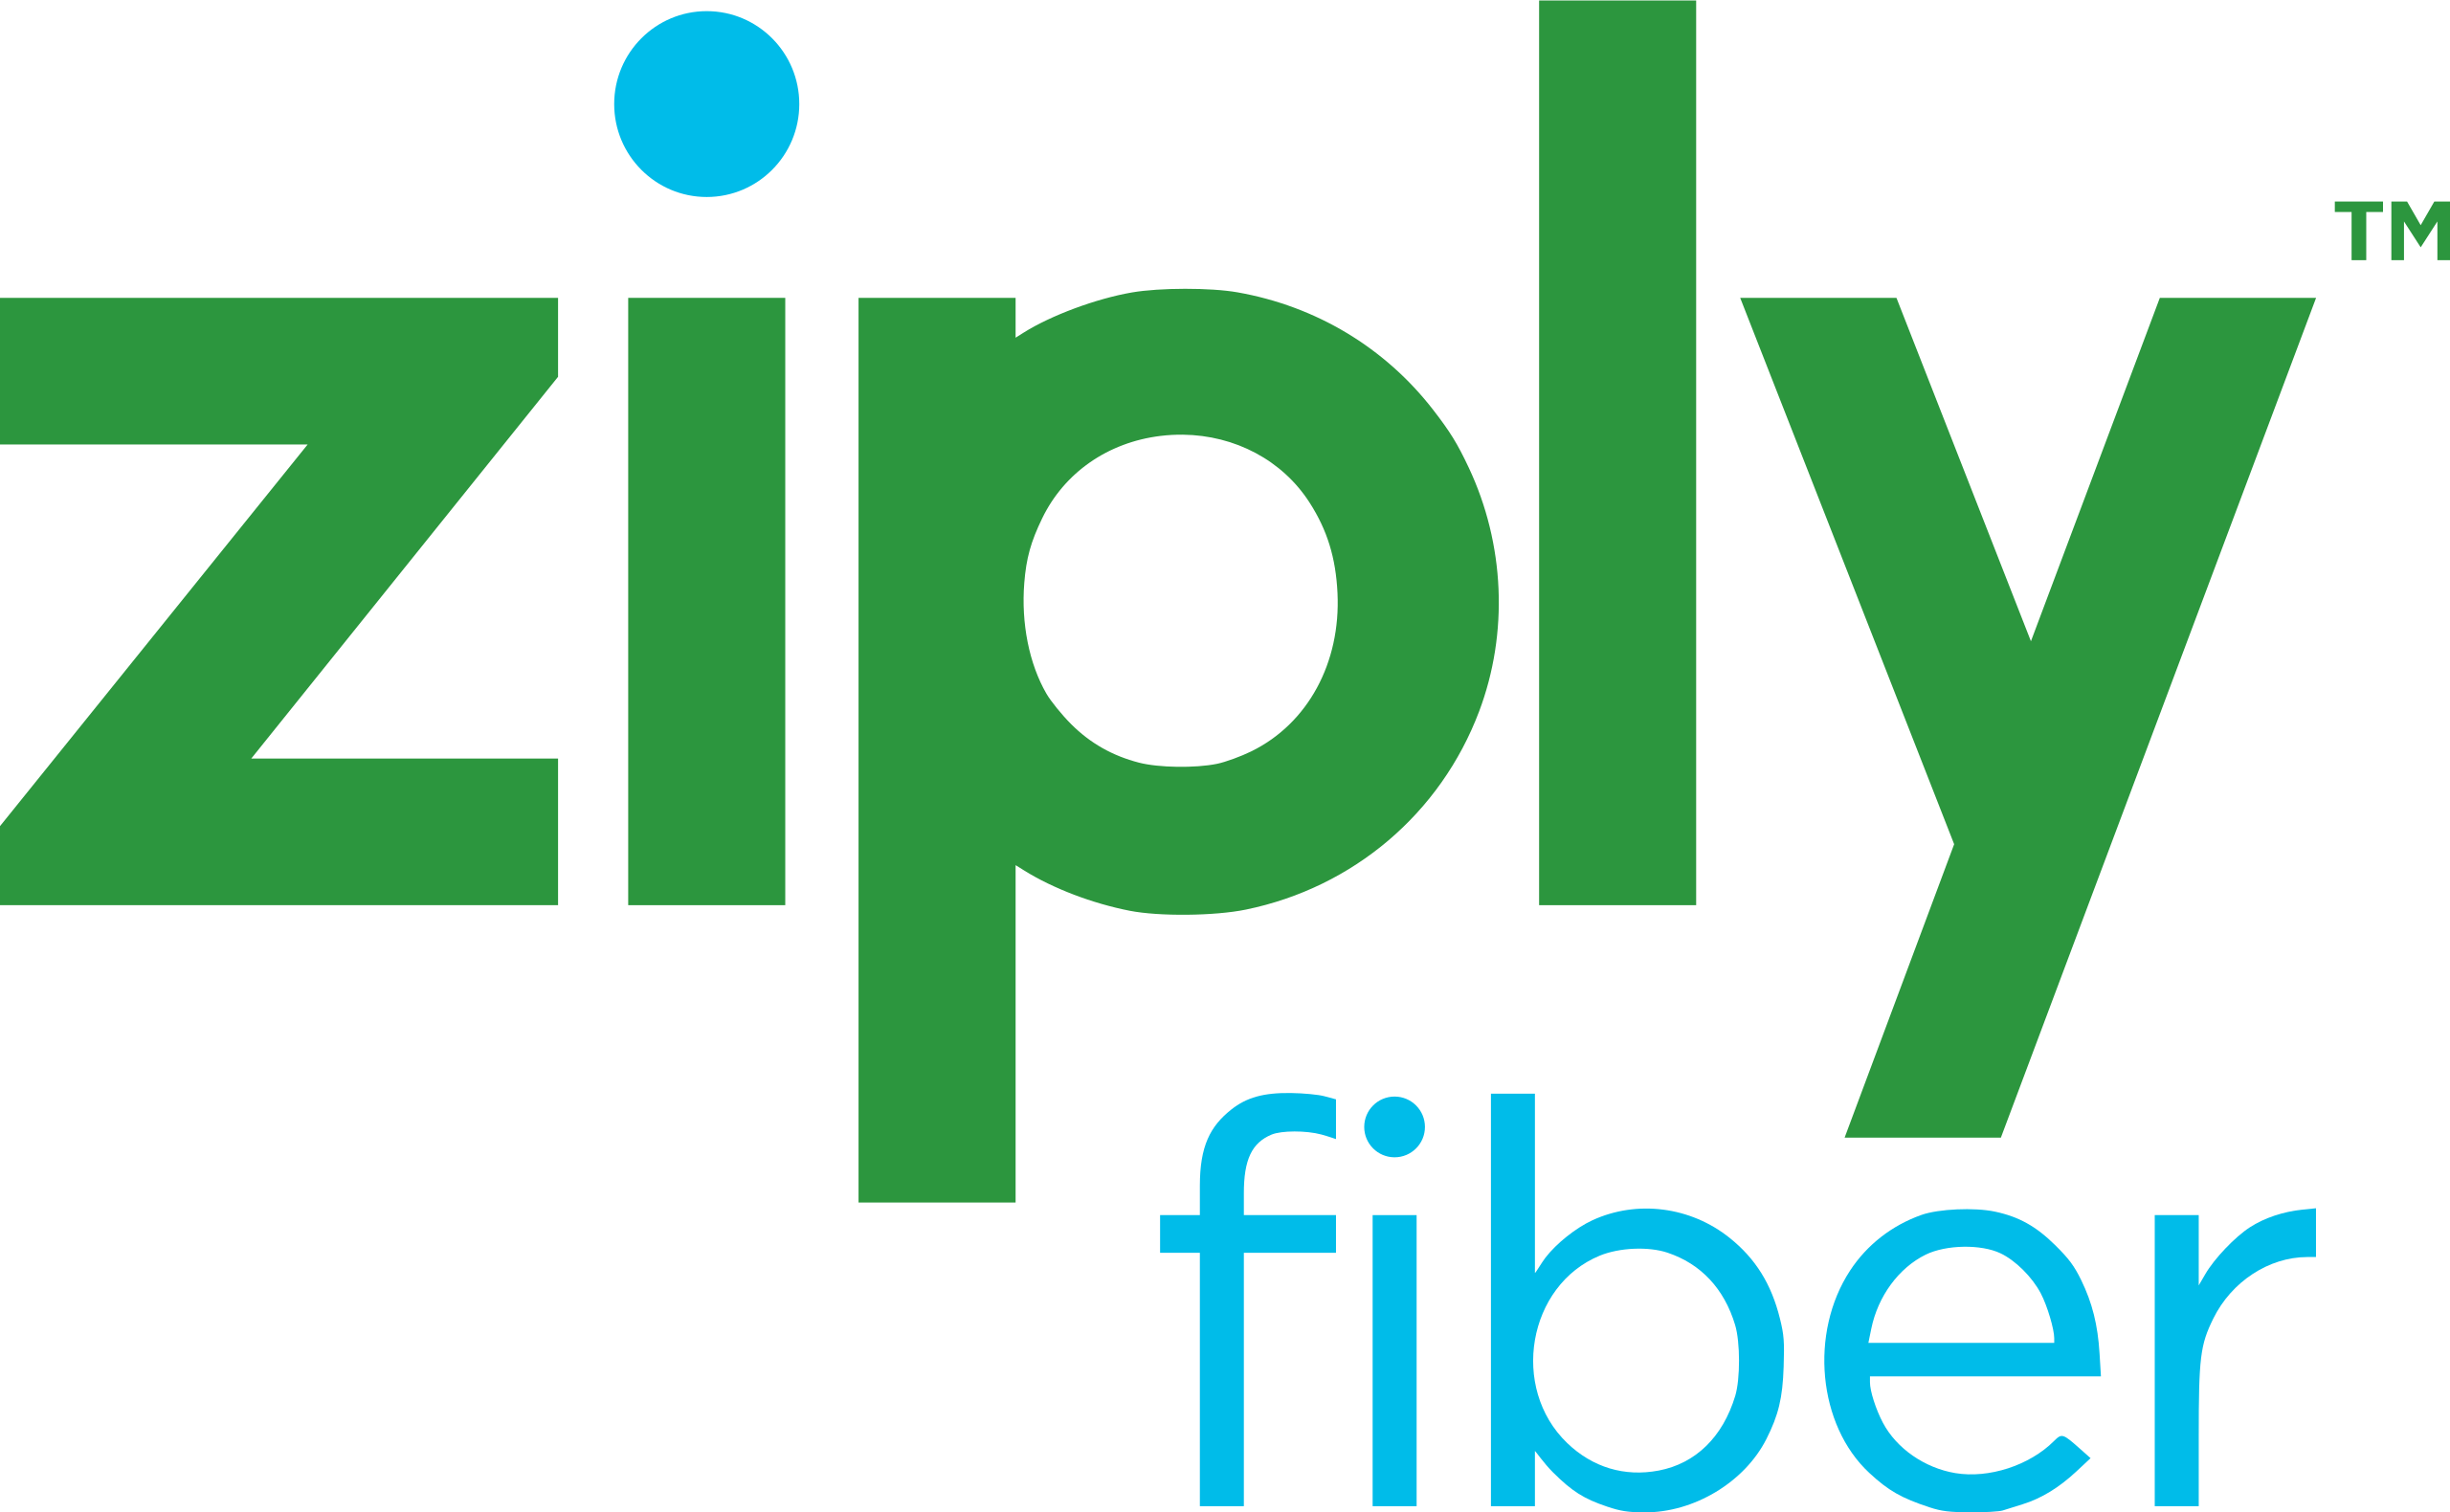 Ziply Fiber Business